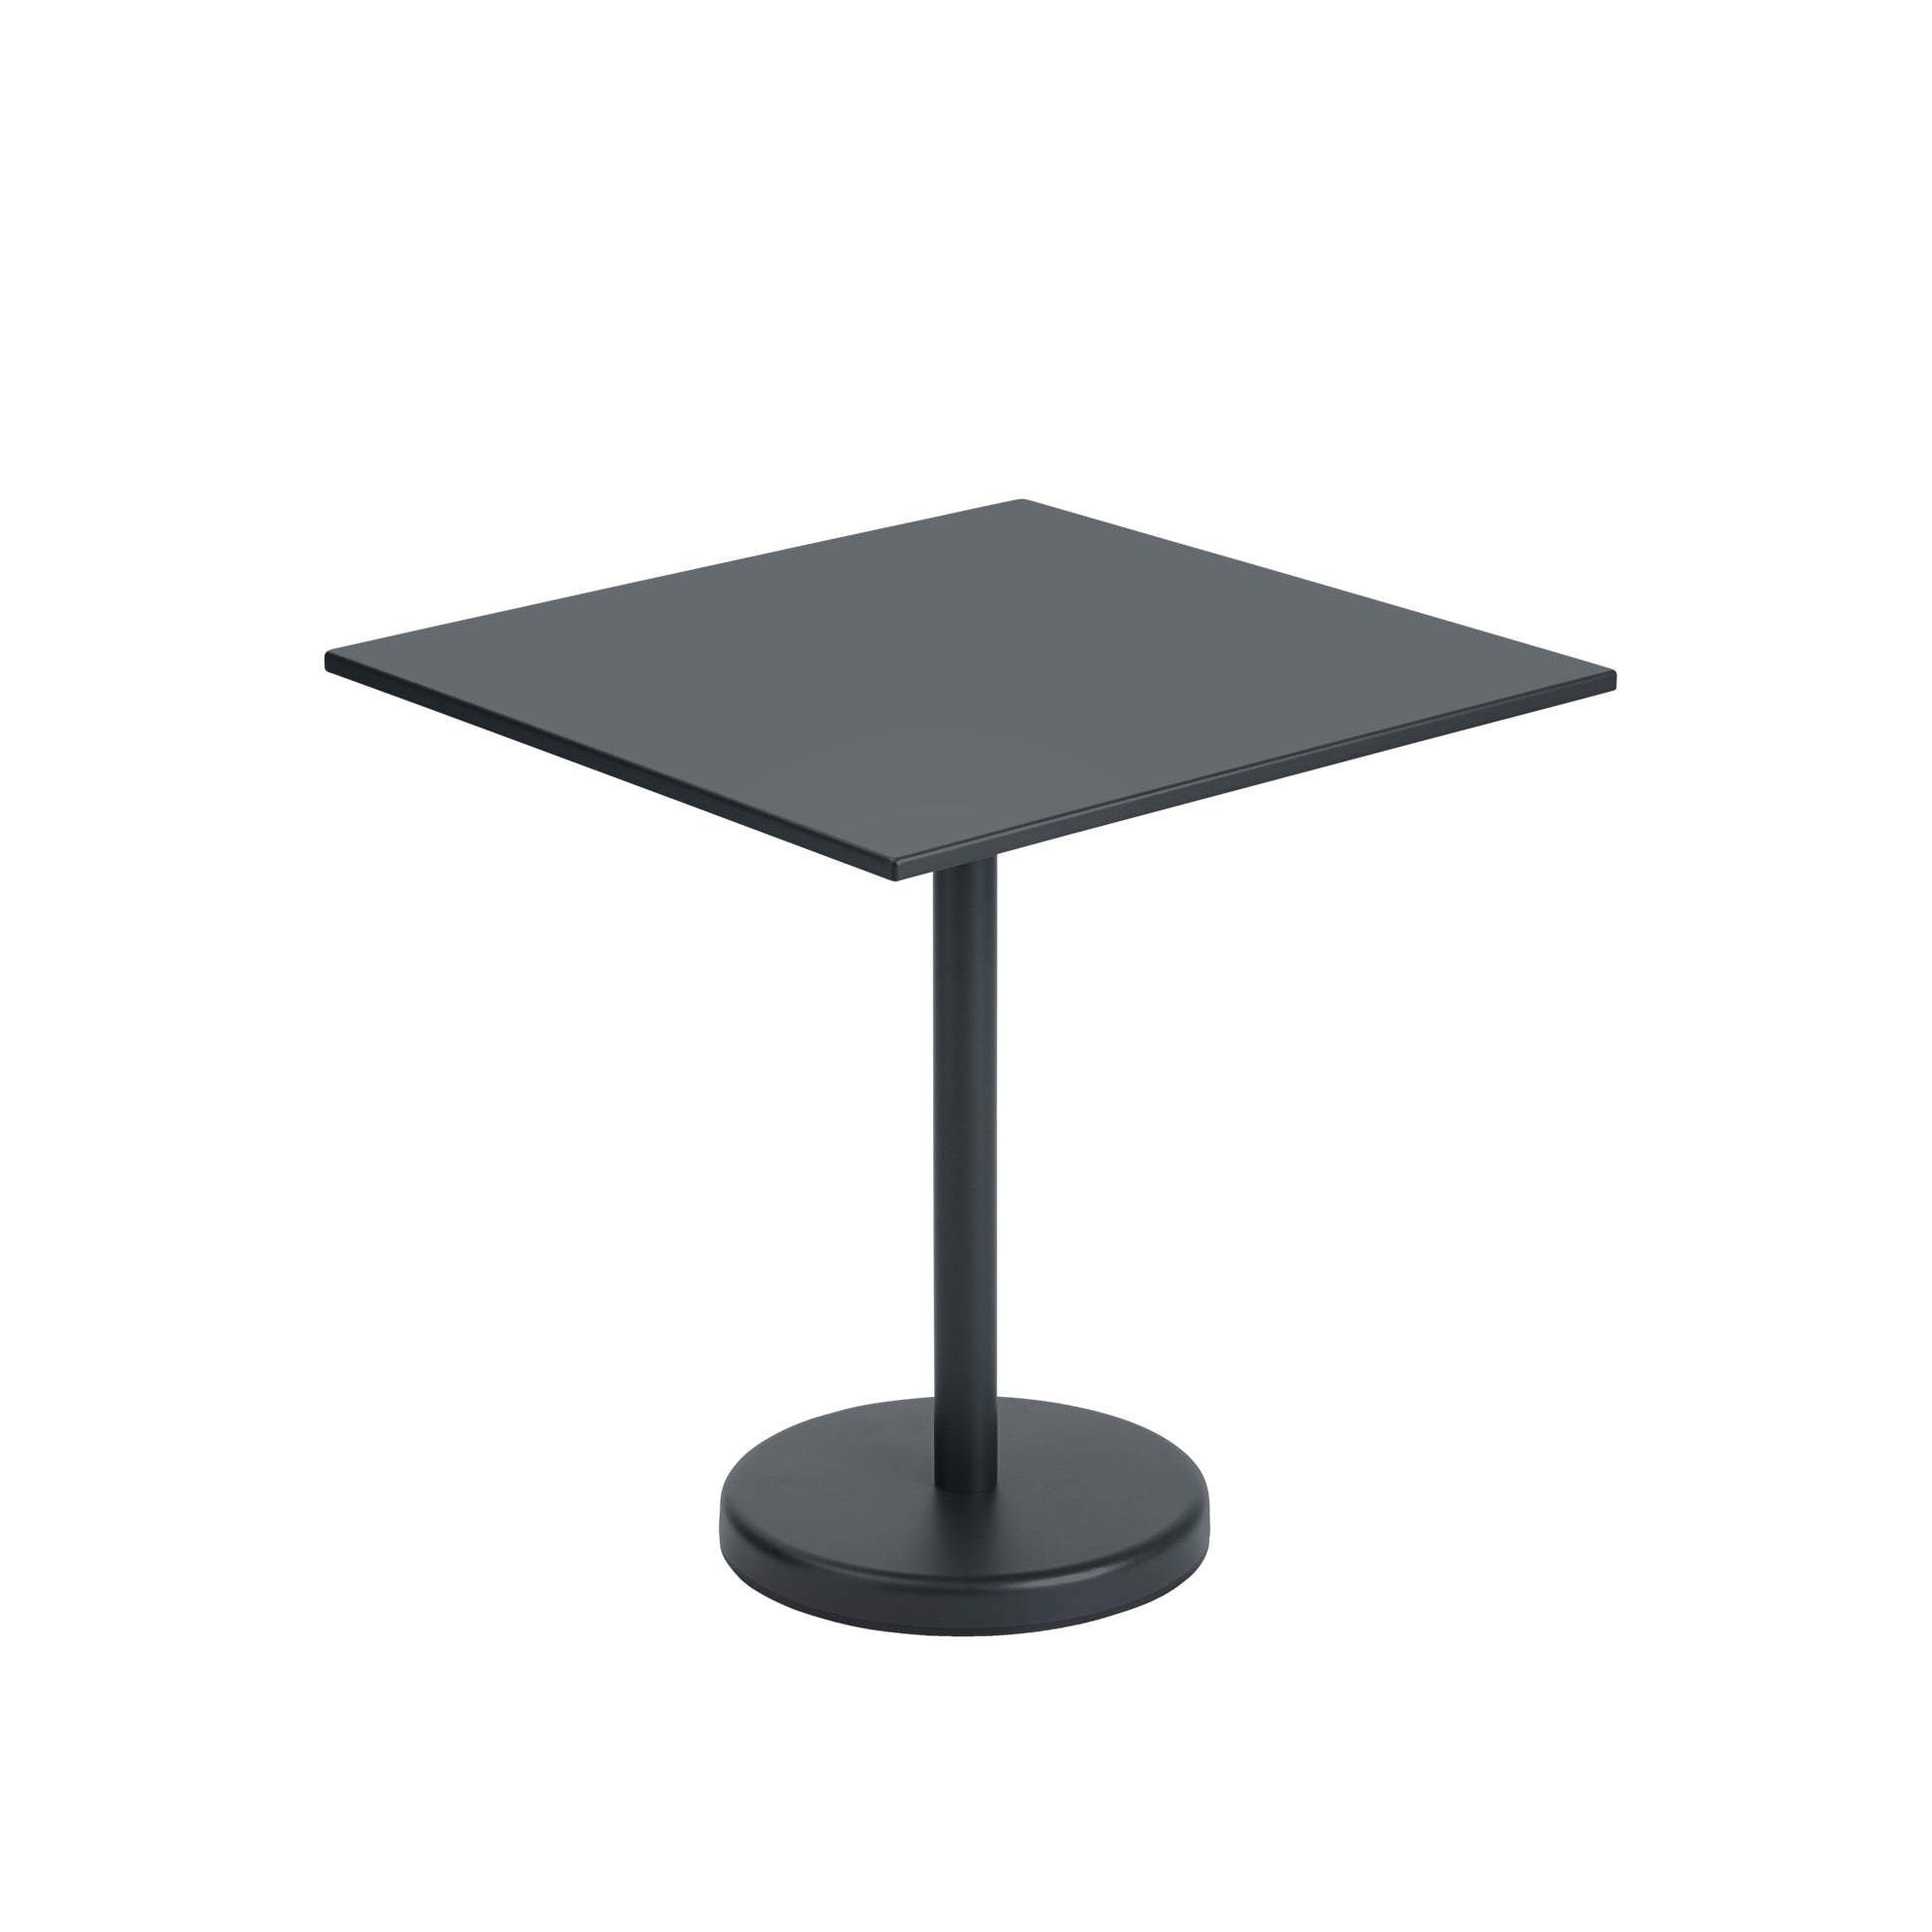 Linear Steel Café Garden Table 70 X 70 cm by Muuto #Black